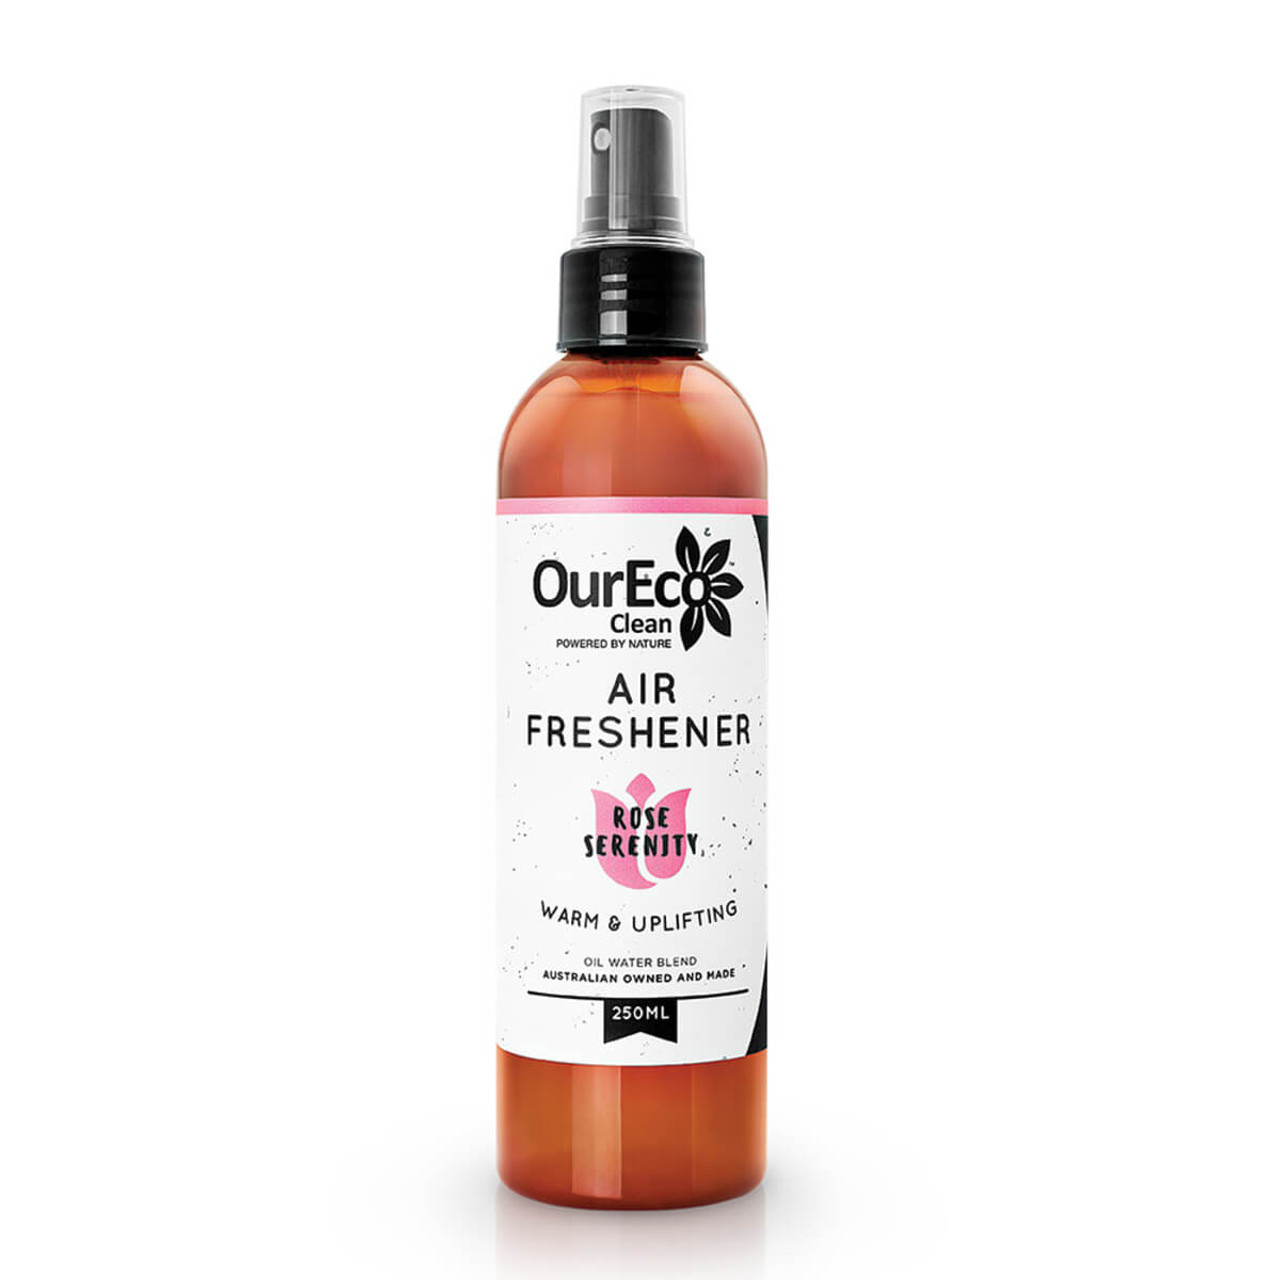 OurEco Air Freshener Rose Serenity 250ml